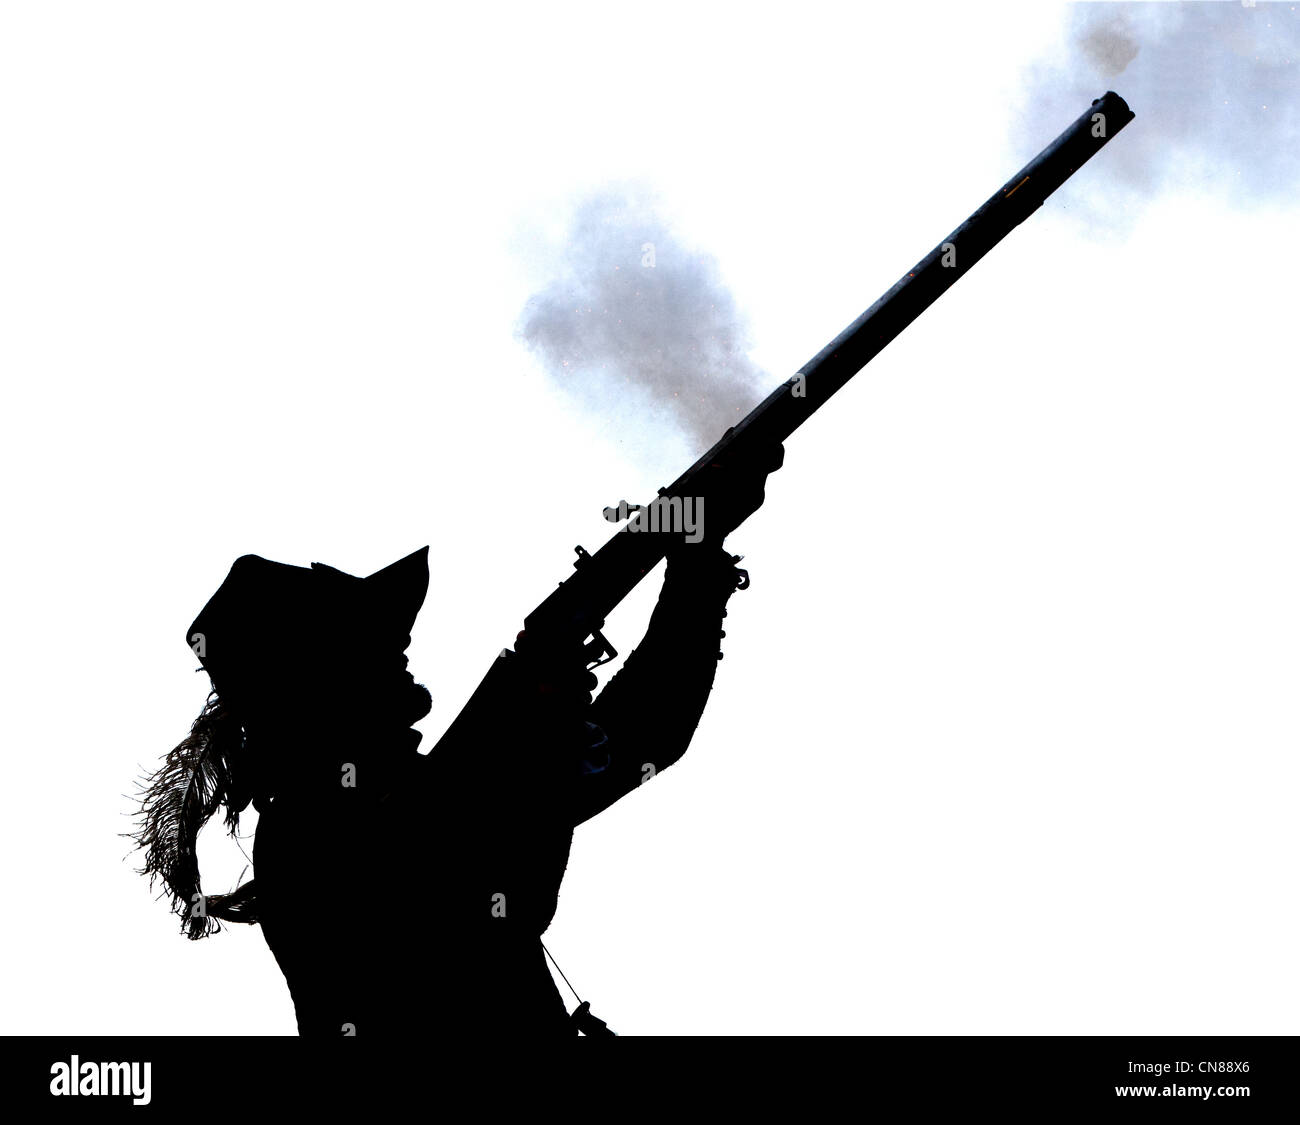 Silhouette of man stooting rifle Stock Photo